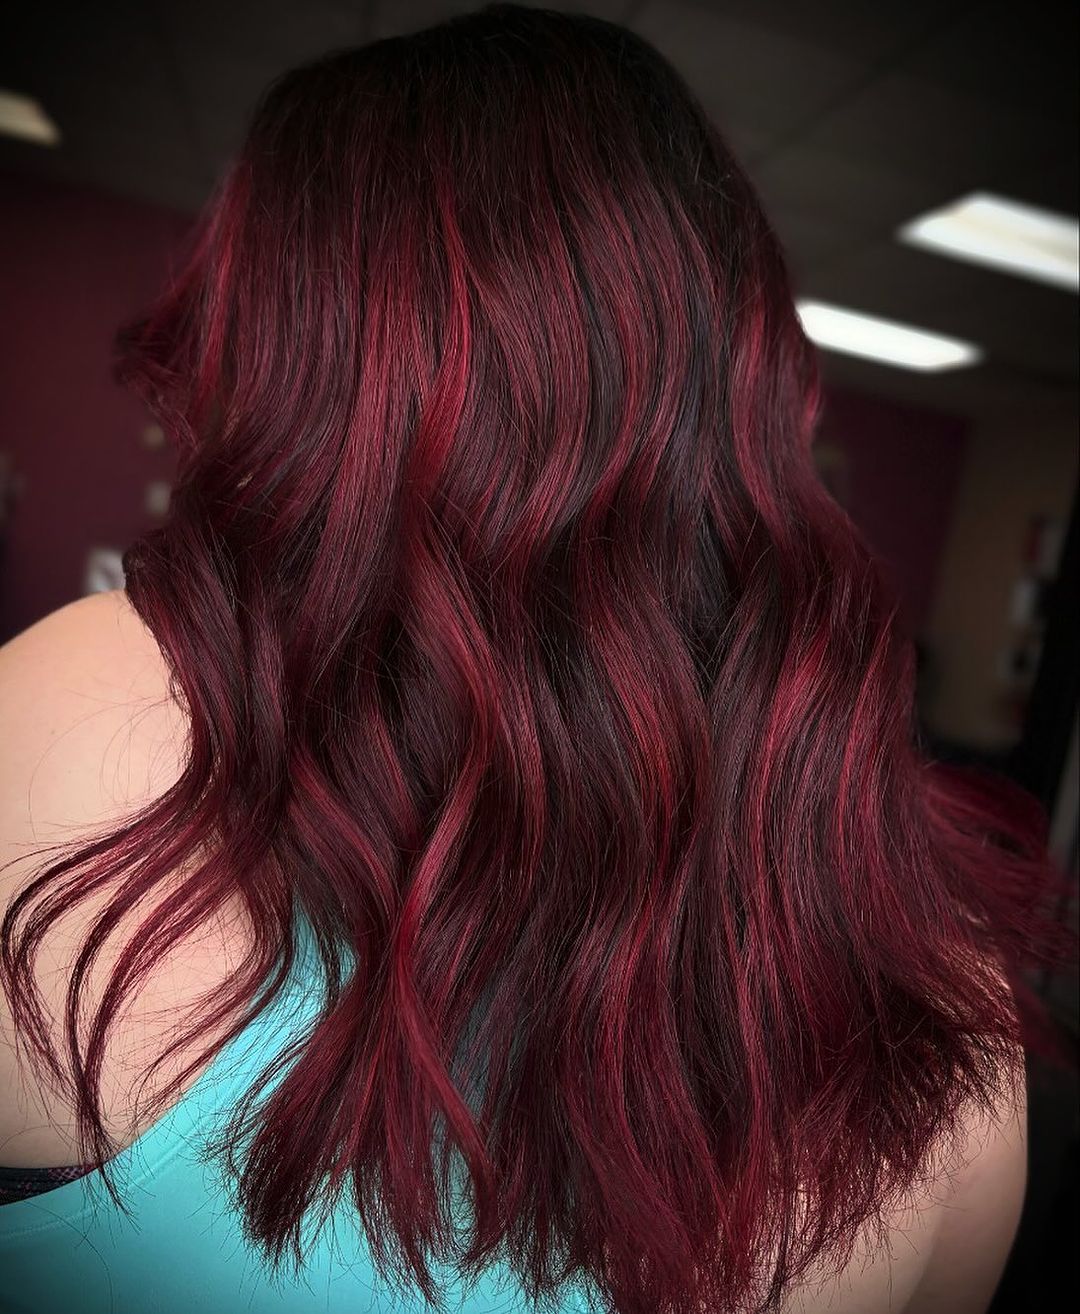 انتخاب رنگ موی قرمز مناسب